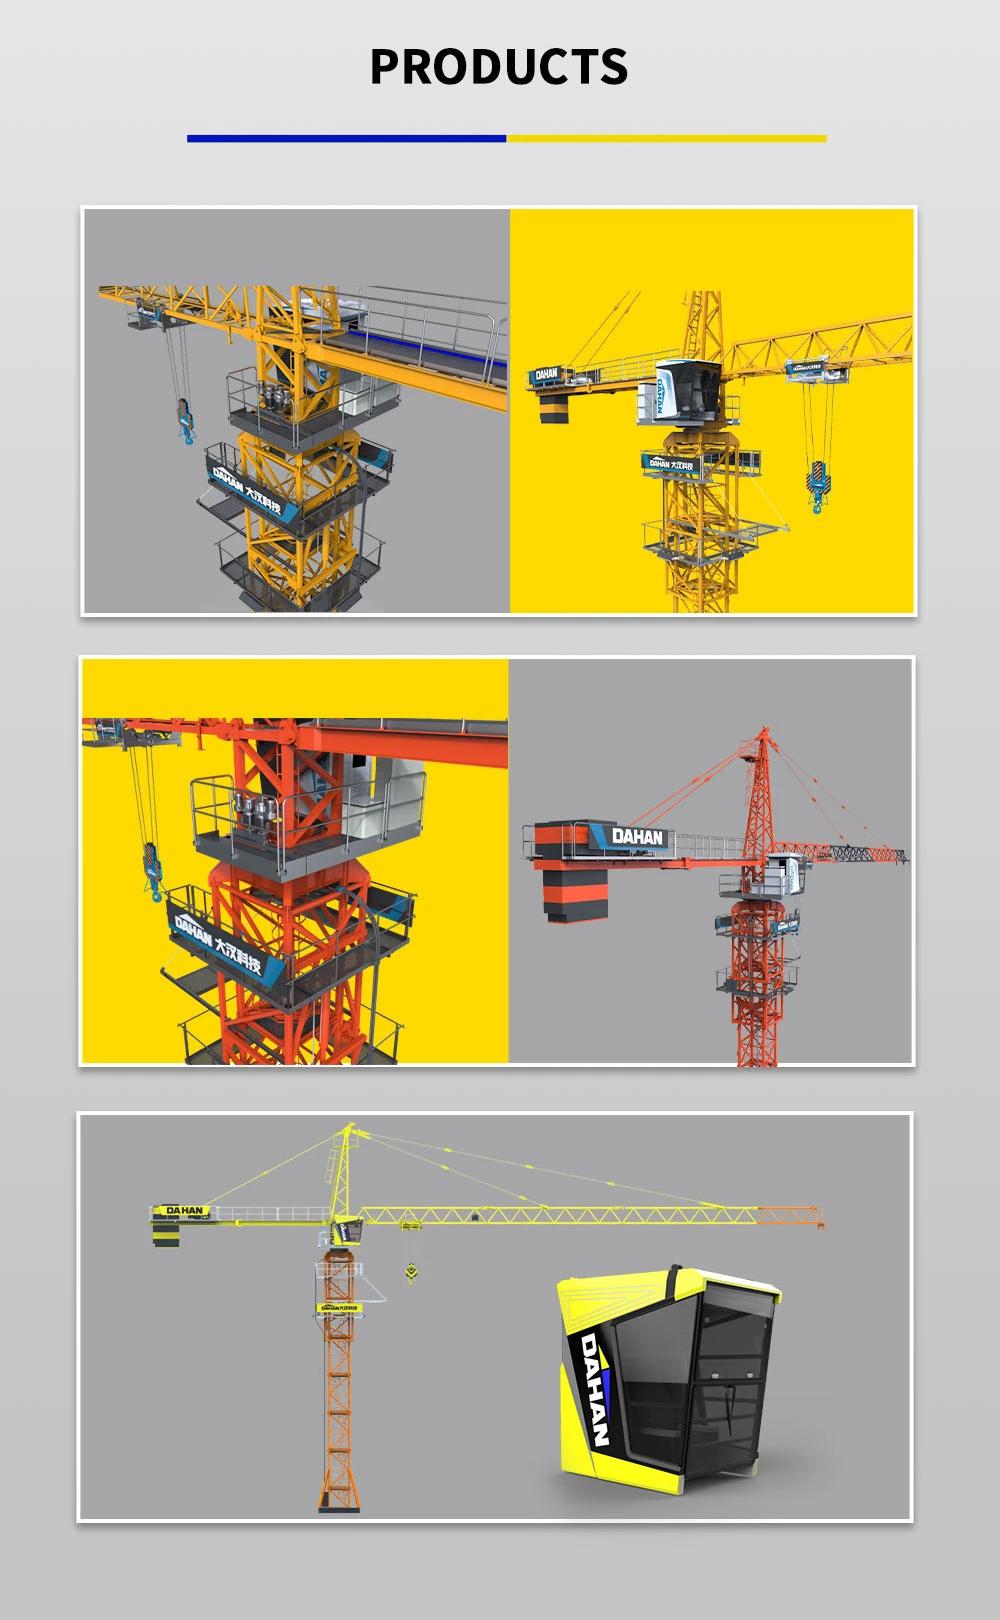 Dahan Building Construction Tower Cap Tower Crane Construction Equipment